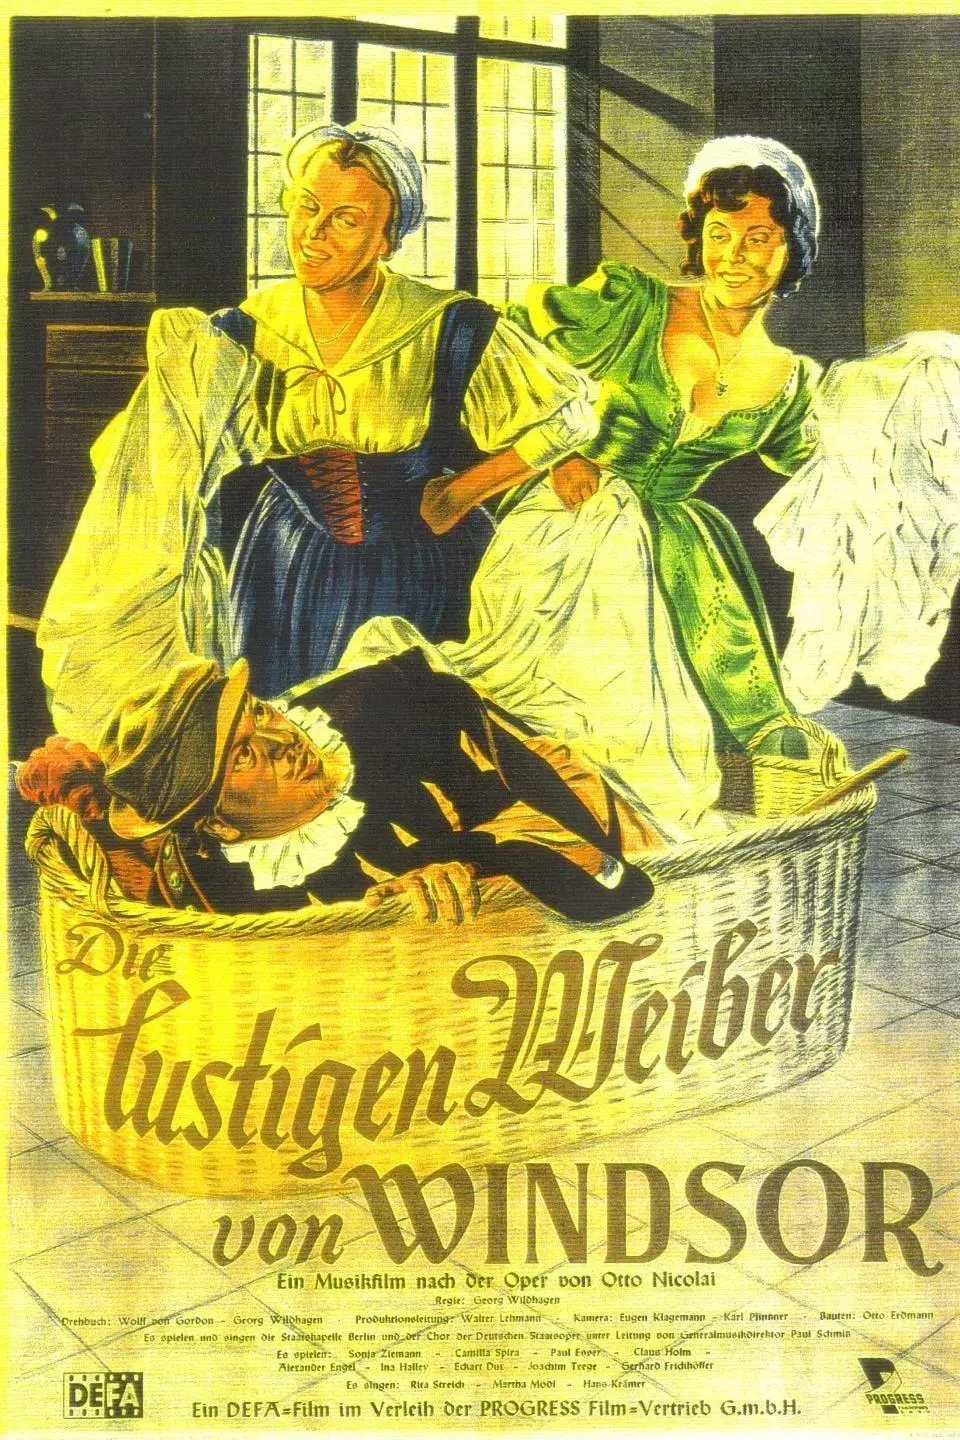 The Merry Wives of Windsor_peliplat